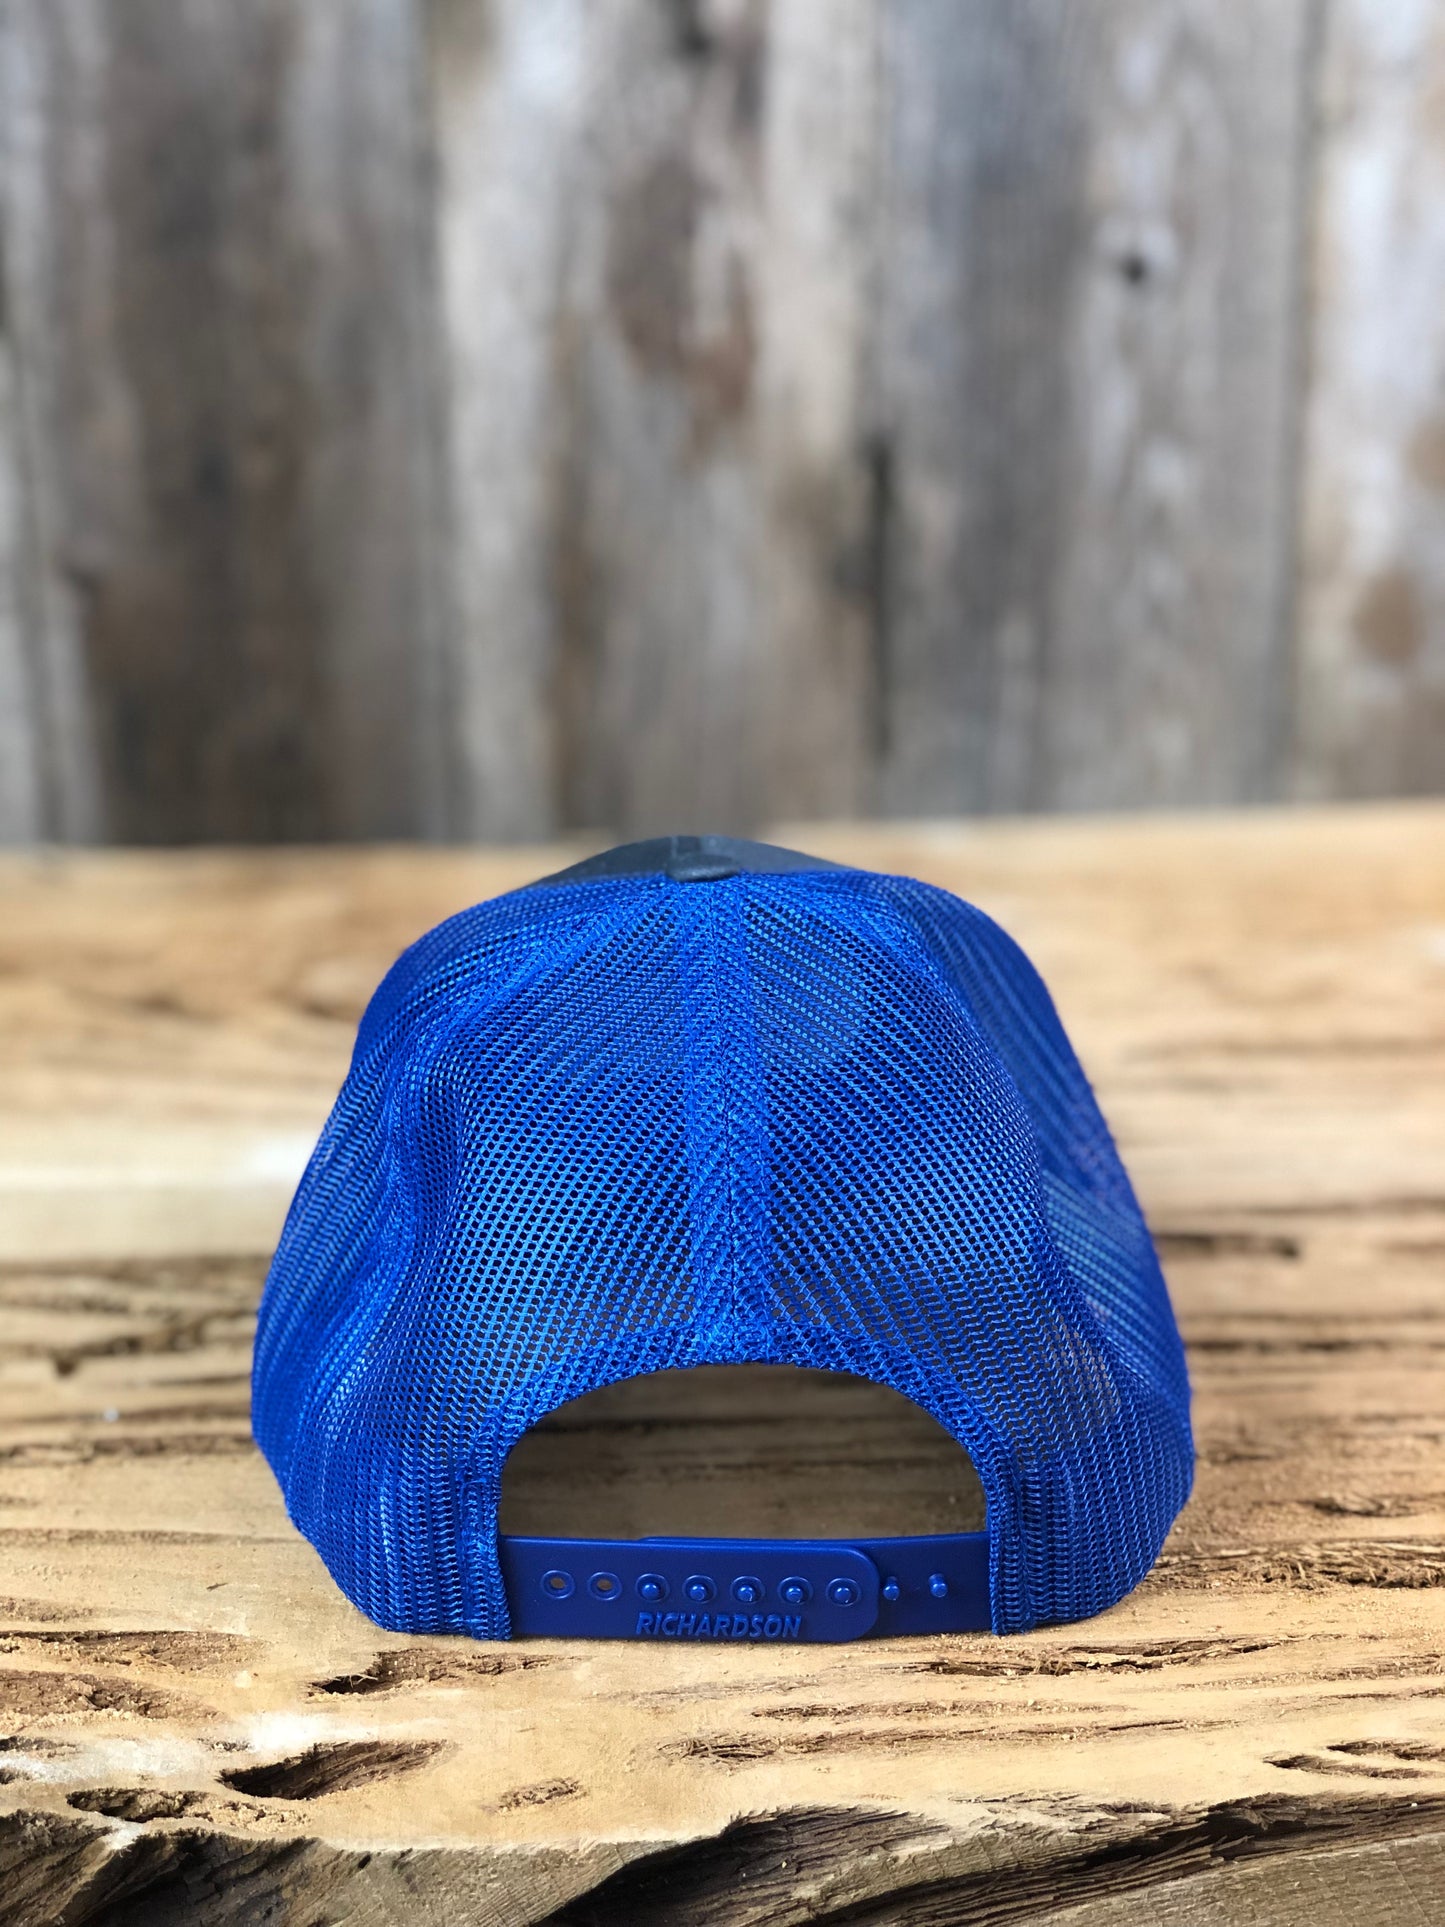 Mesh Back Caps with DGS Logo - Grey/Blue